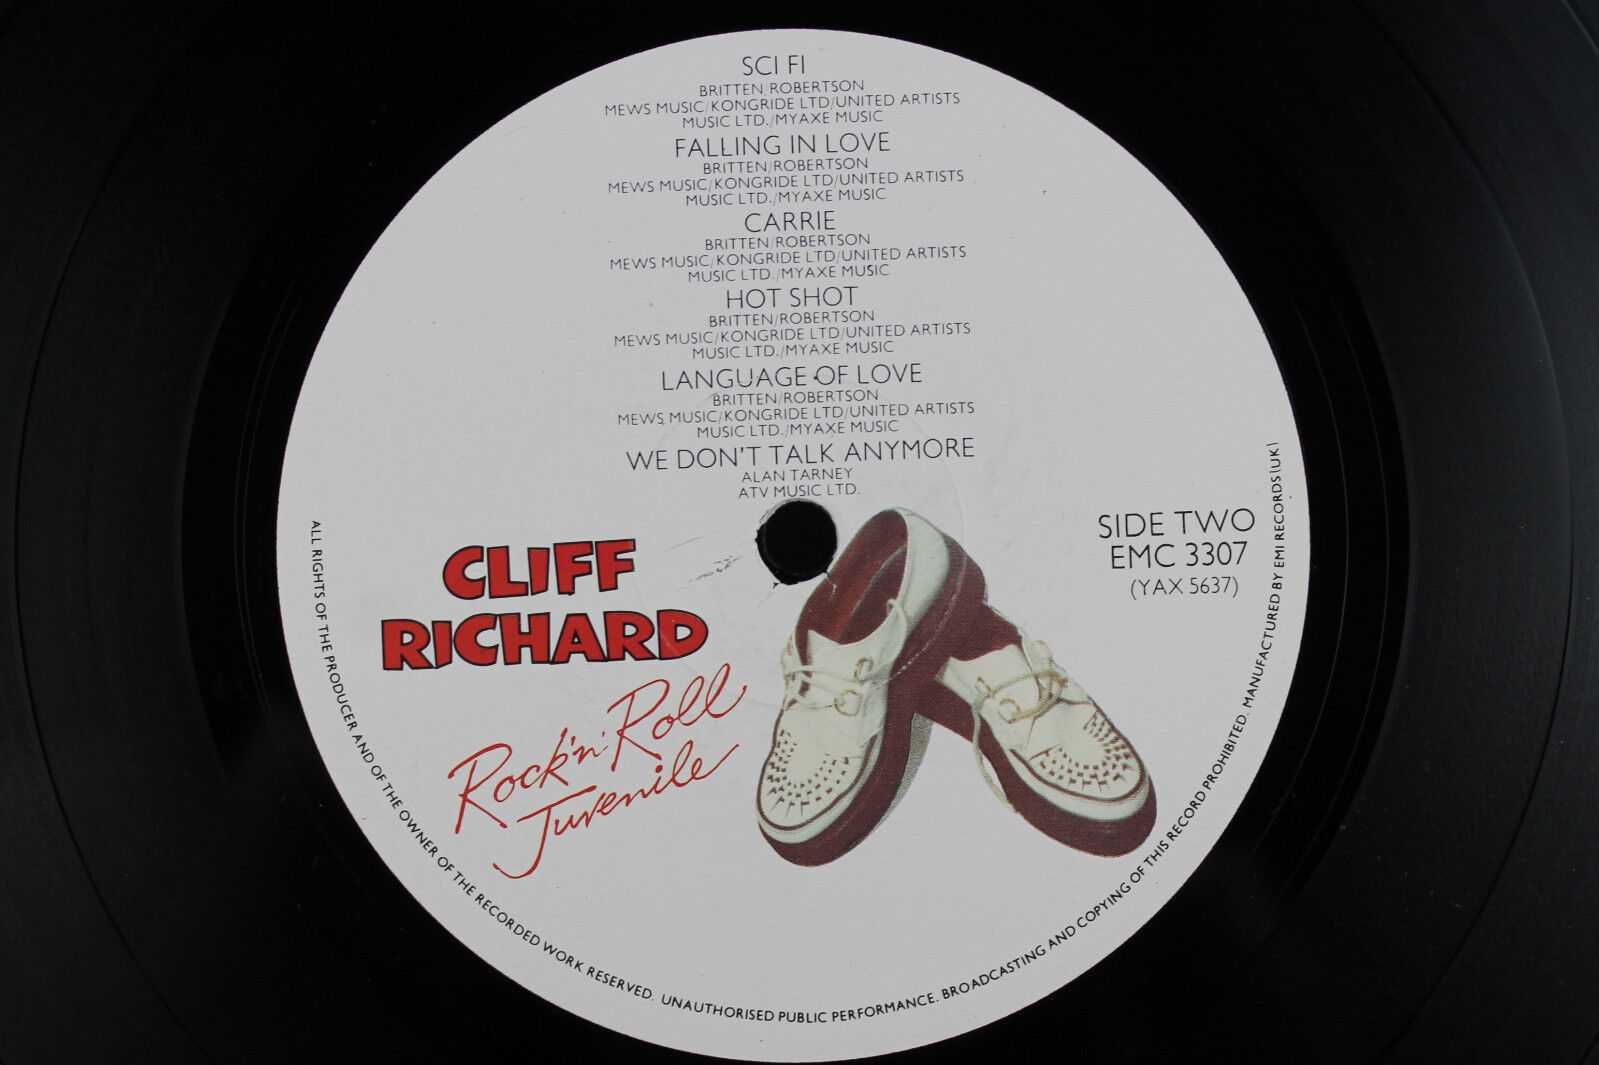 Vinyl Cliff Richard - Rock'n Roll Juvenile - LP - 1979 - EMI винил